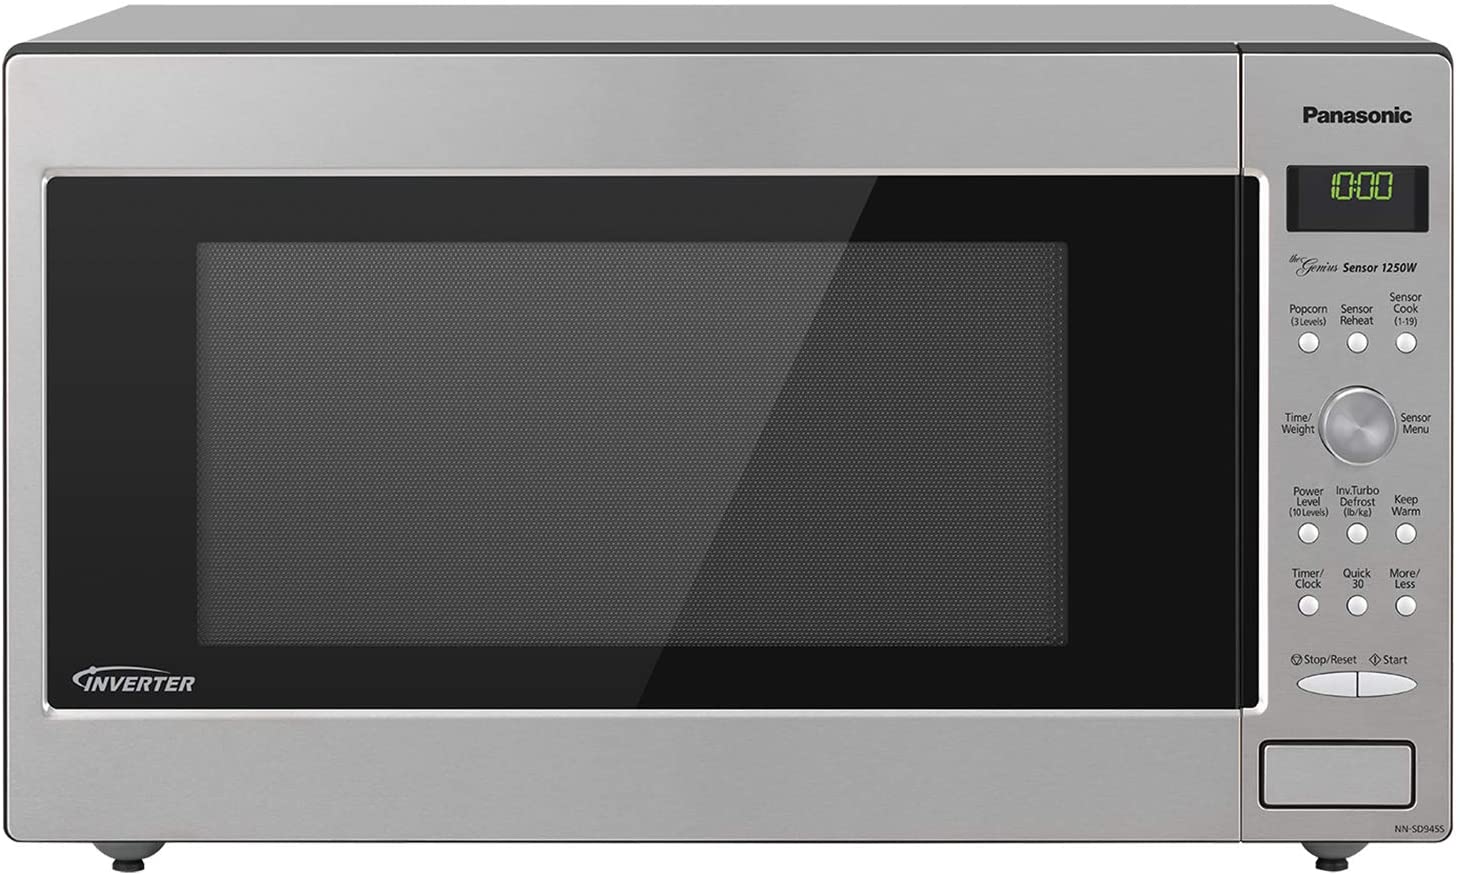 Panasonic NN-SB646S 1.3 cu ft Microwave Oven Stainless Steel Countertop 